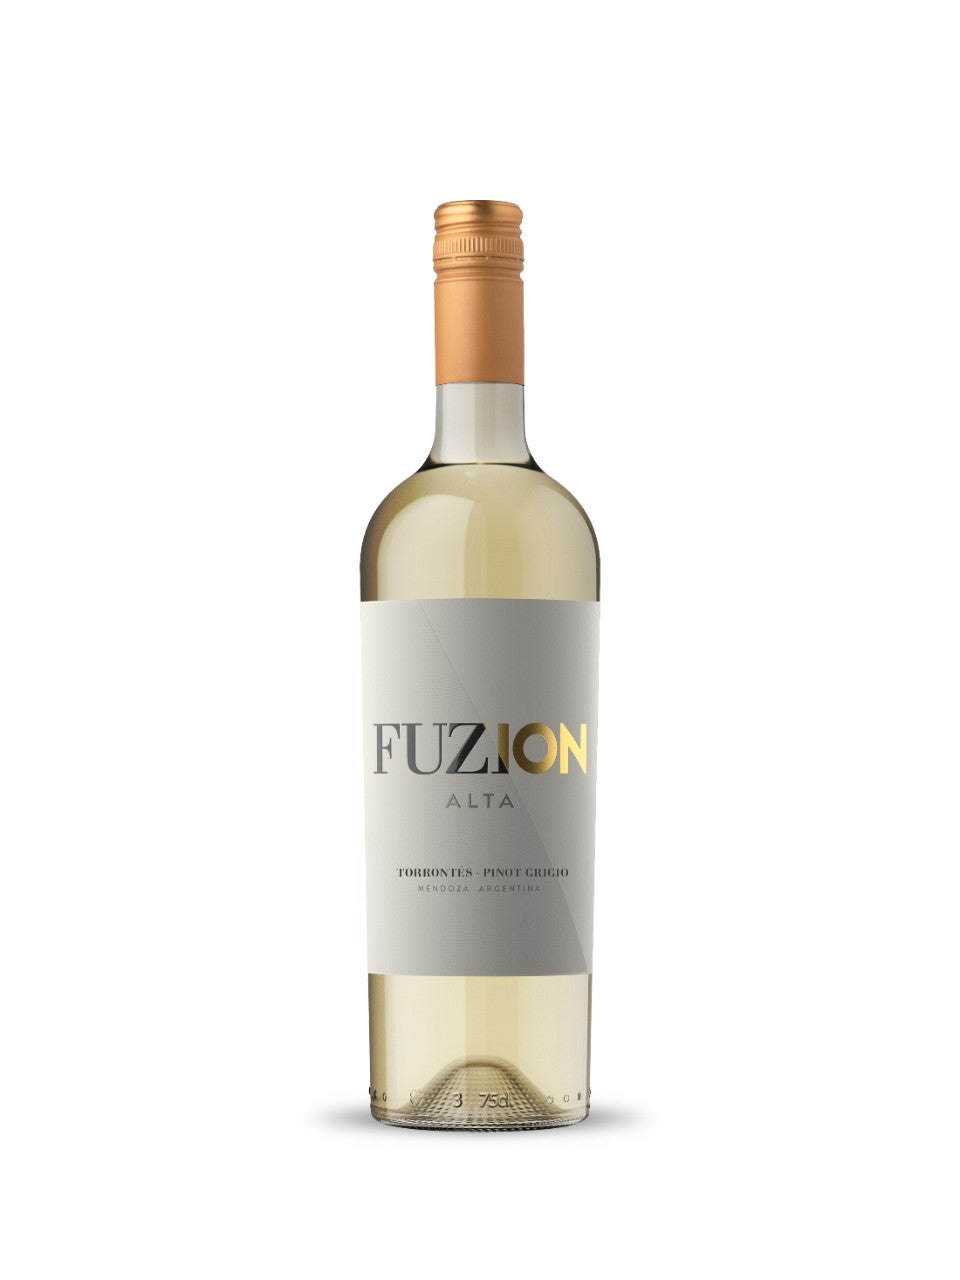 Fuzion Alta Torrontes Pinot Grigio Blend 750 mL bottle